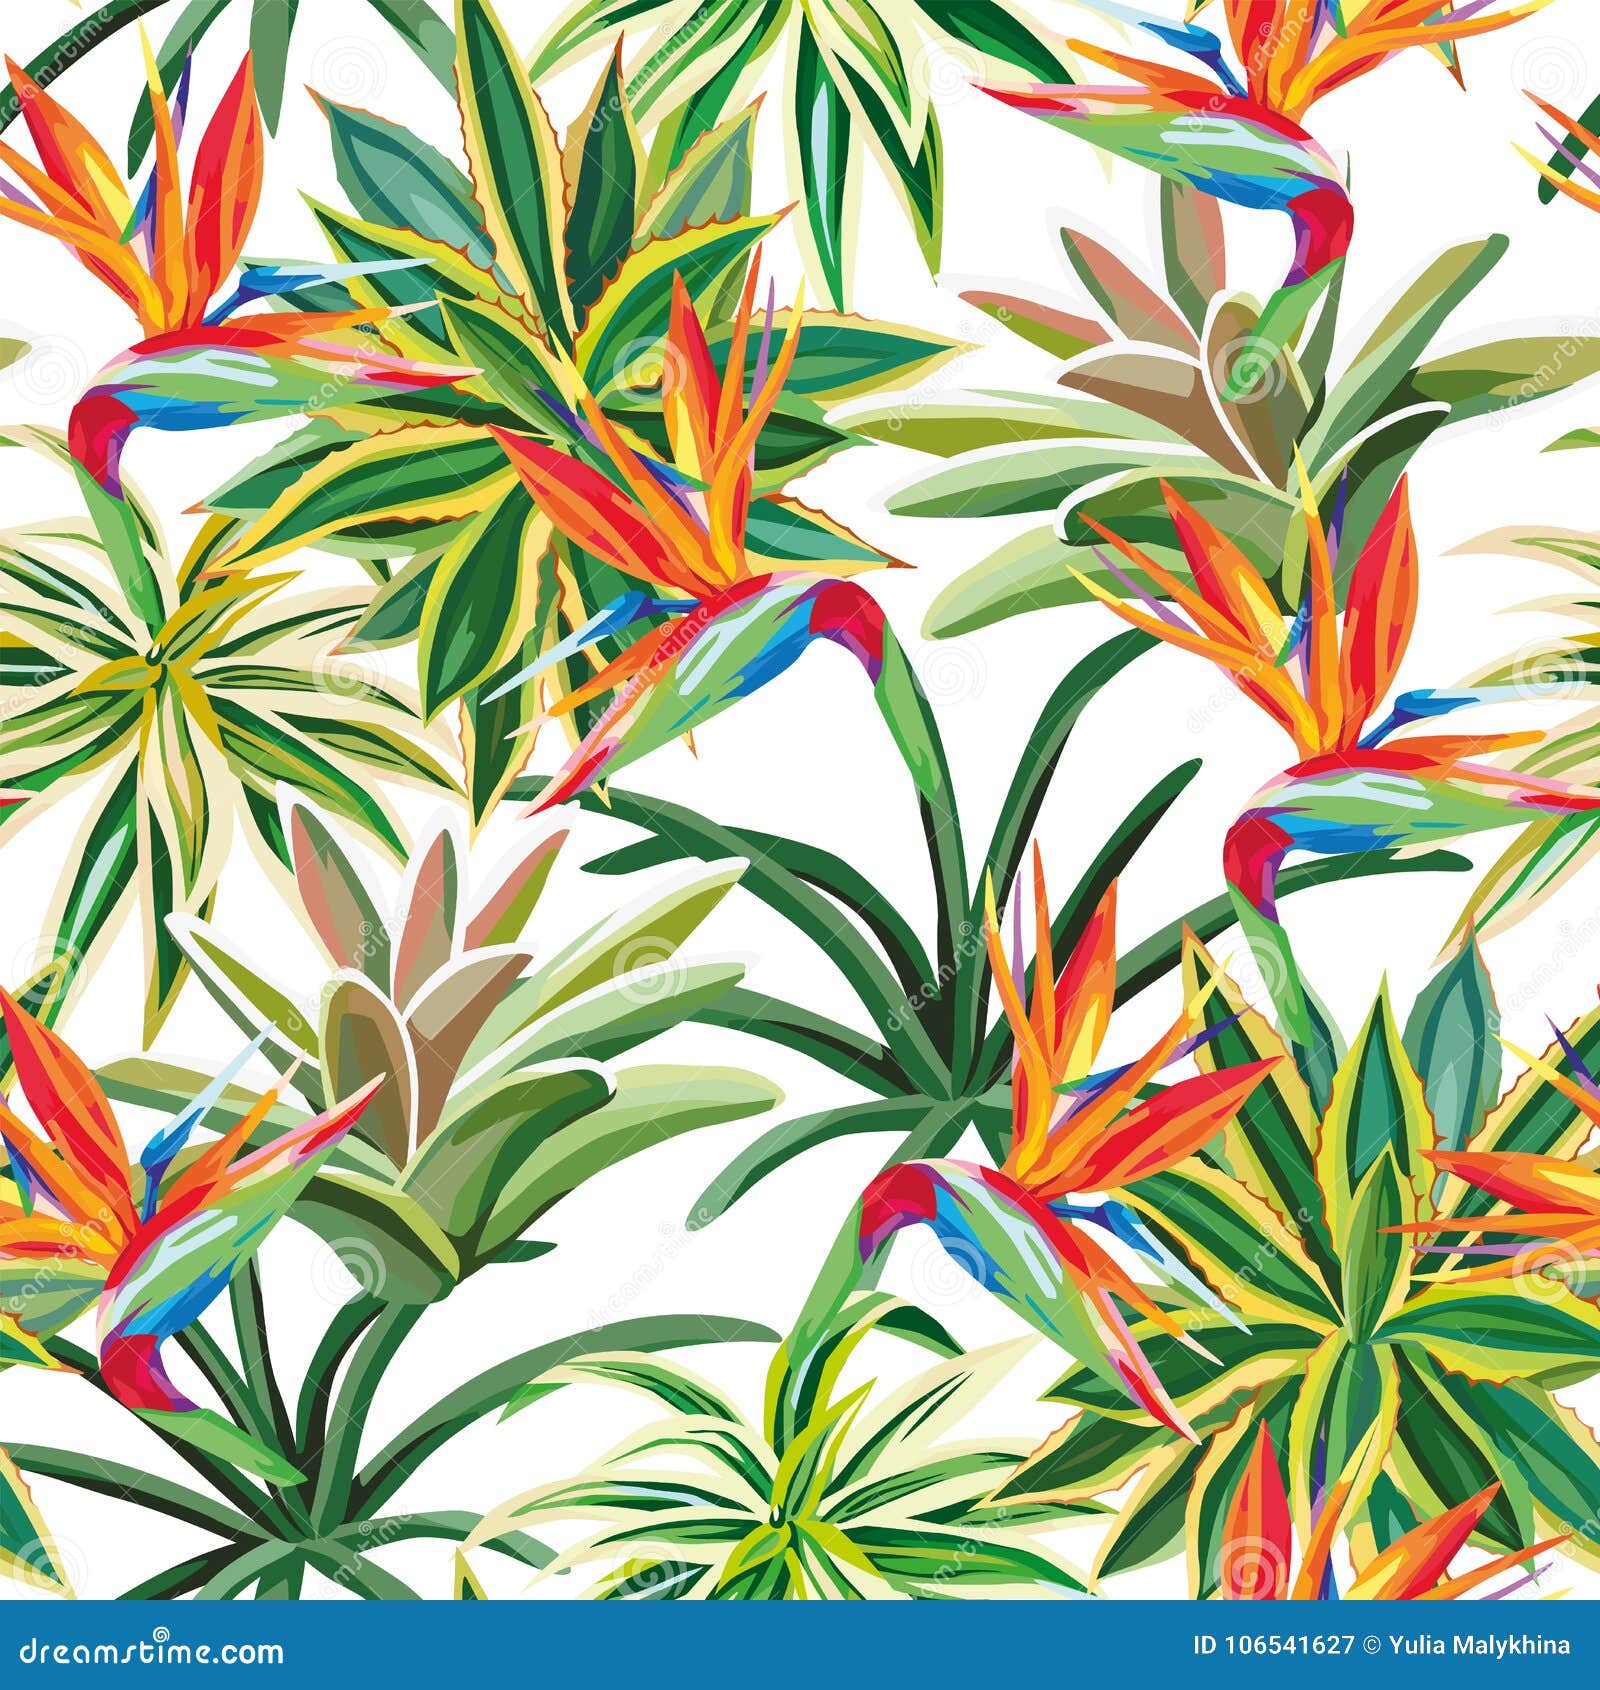 cactus bird of paradise flowers seamless pattern white background